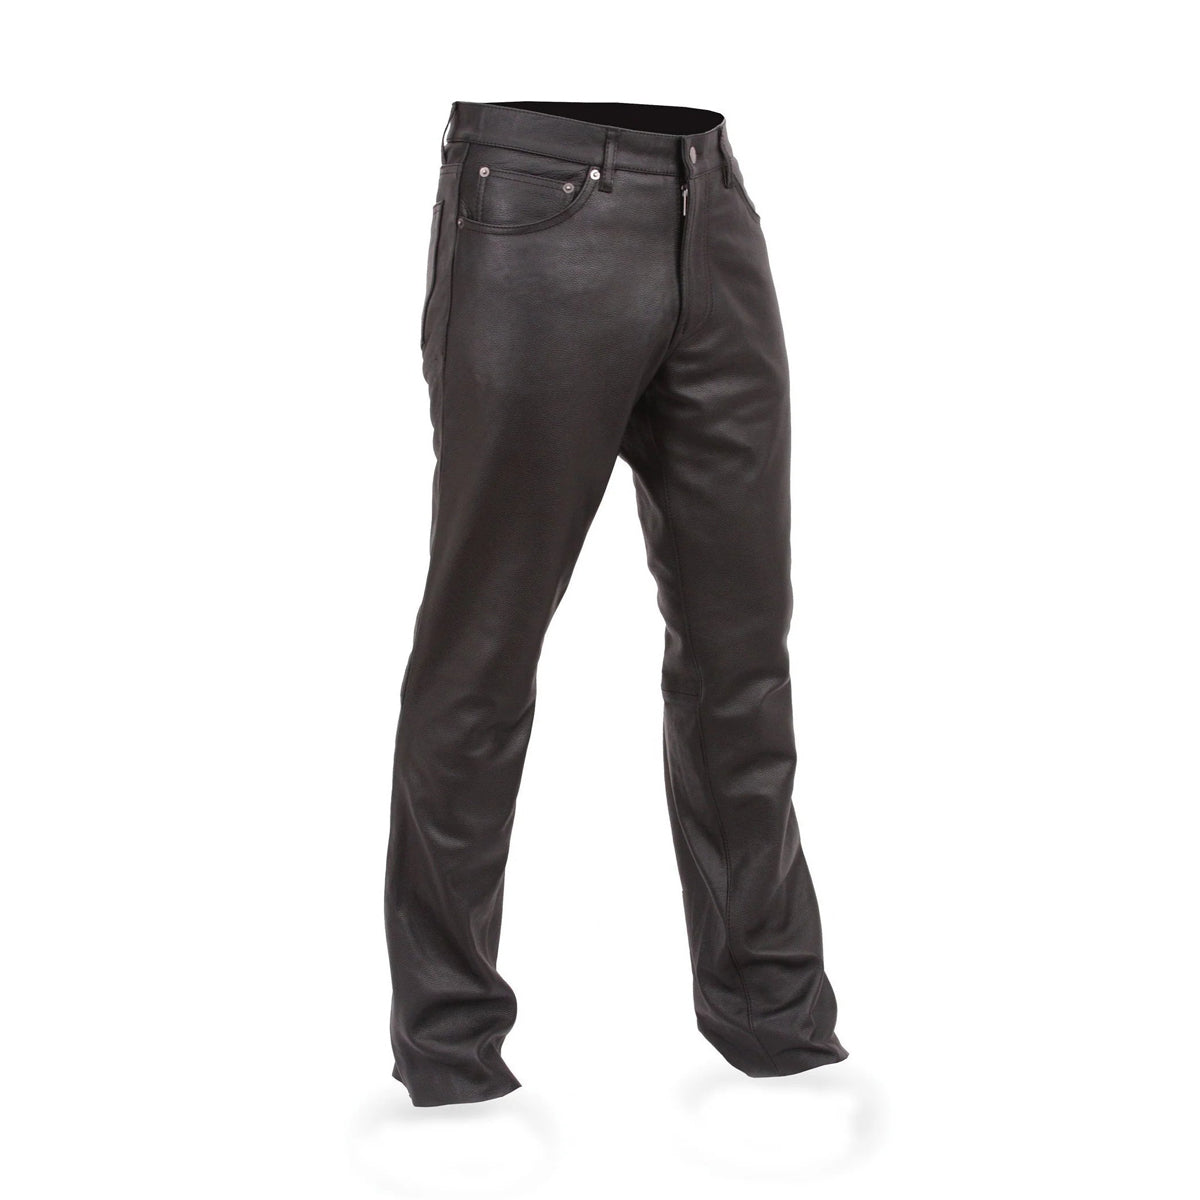 Commander - Men's Leather Motorcycle Pants